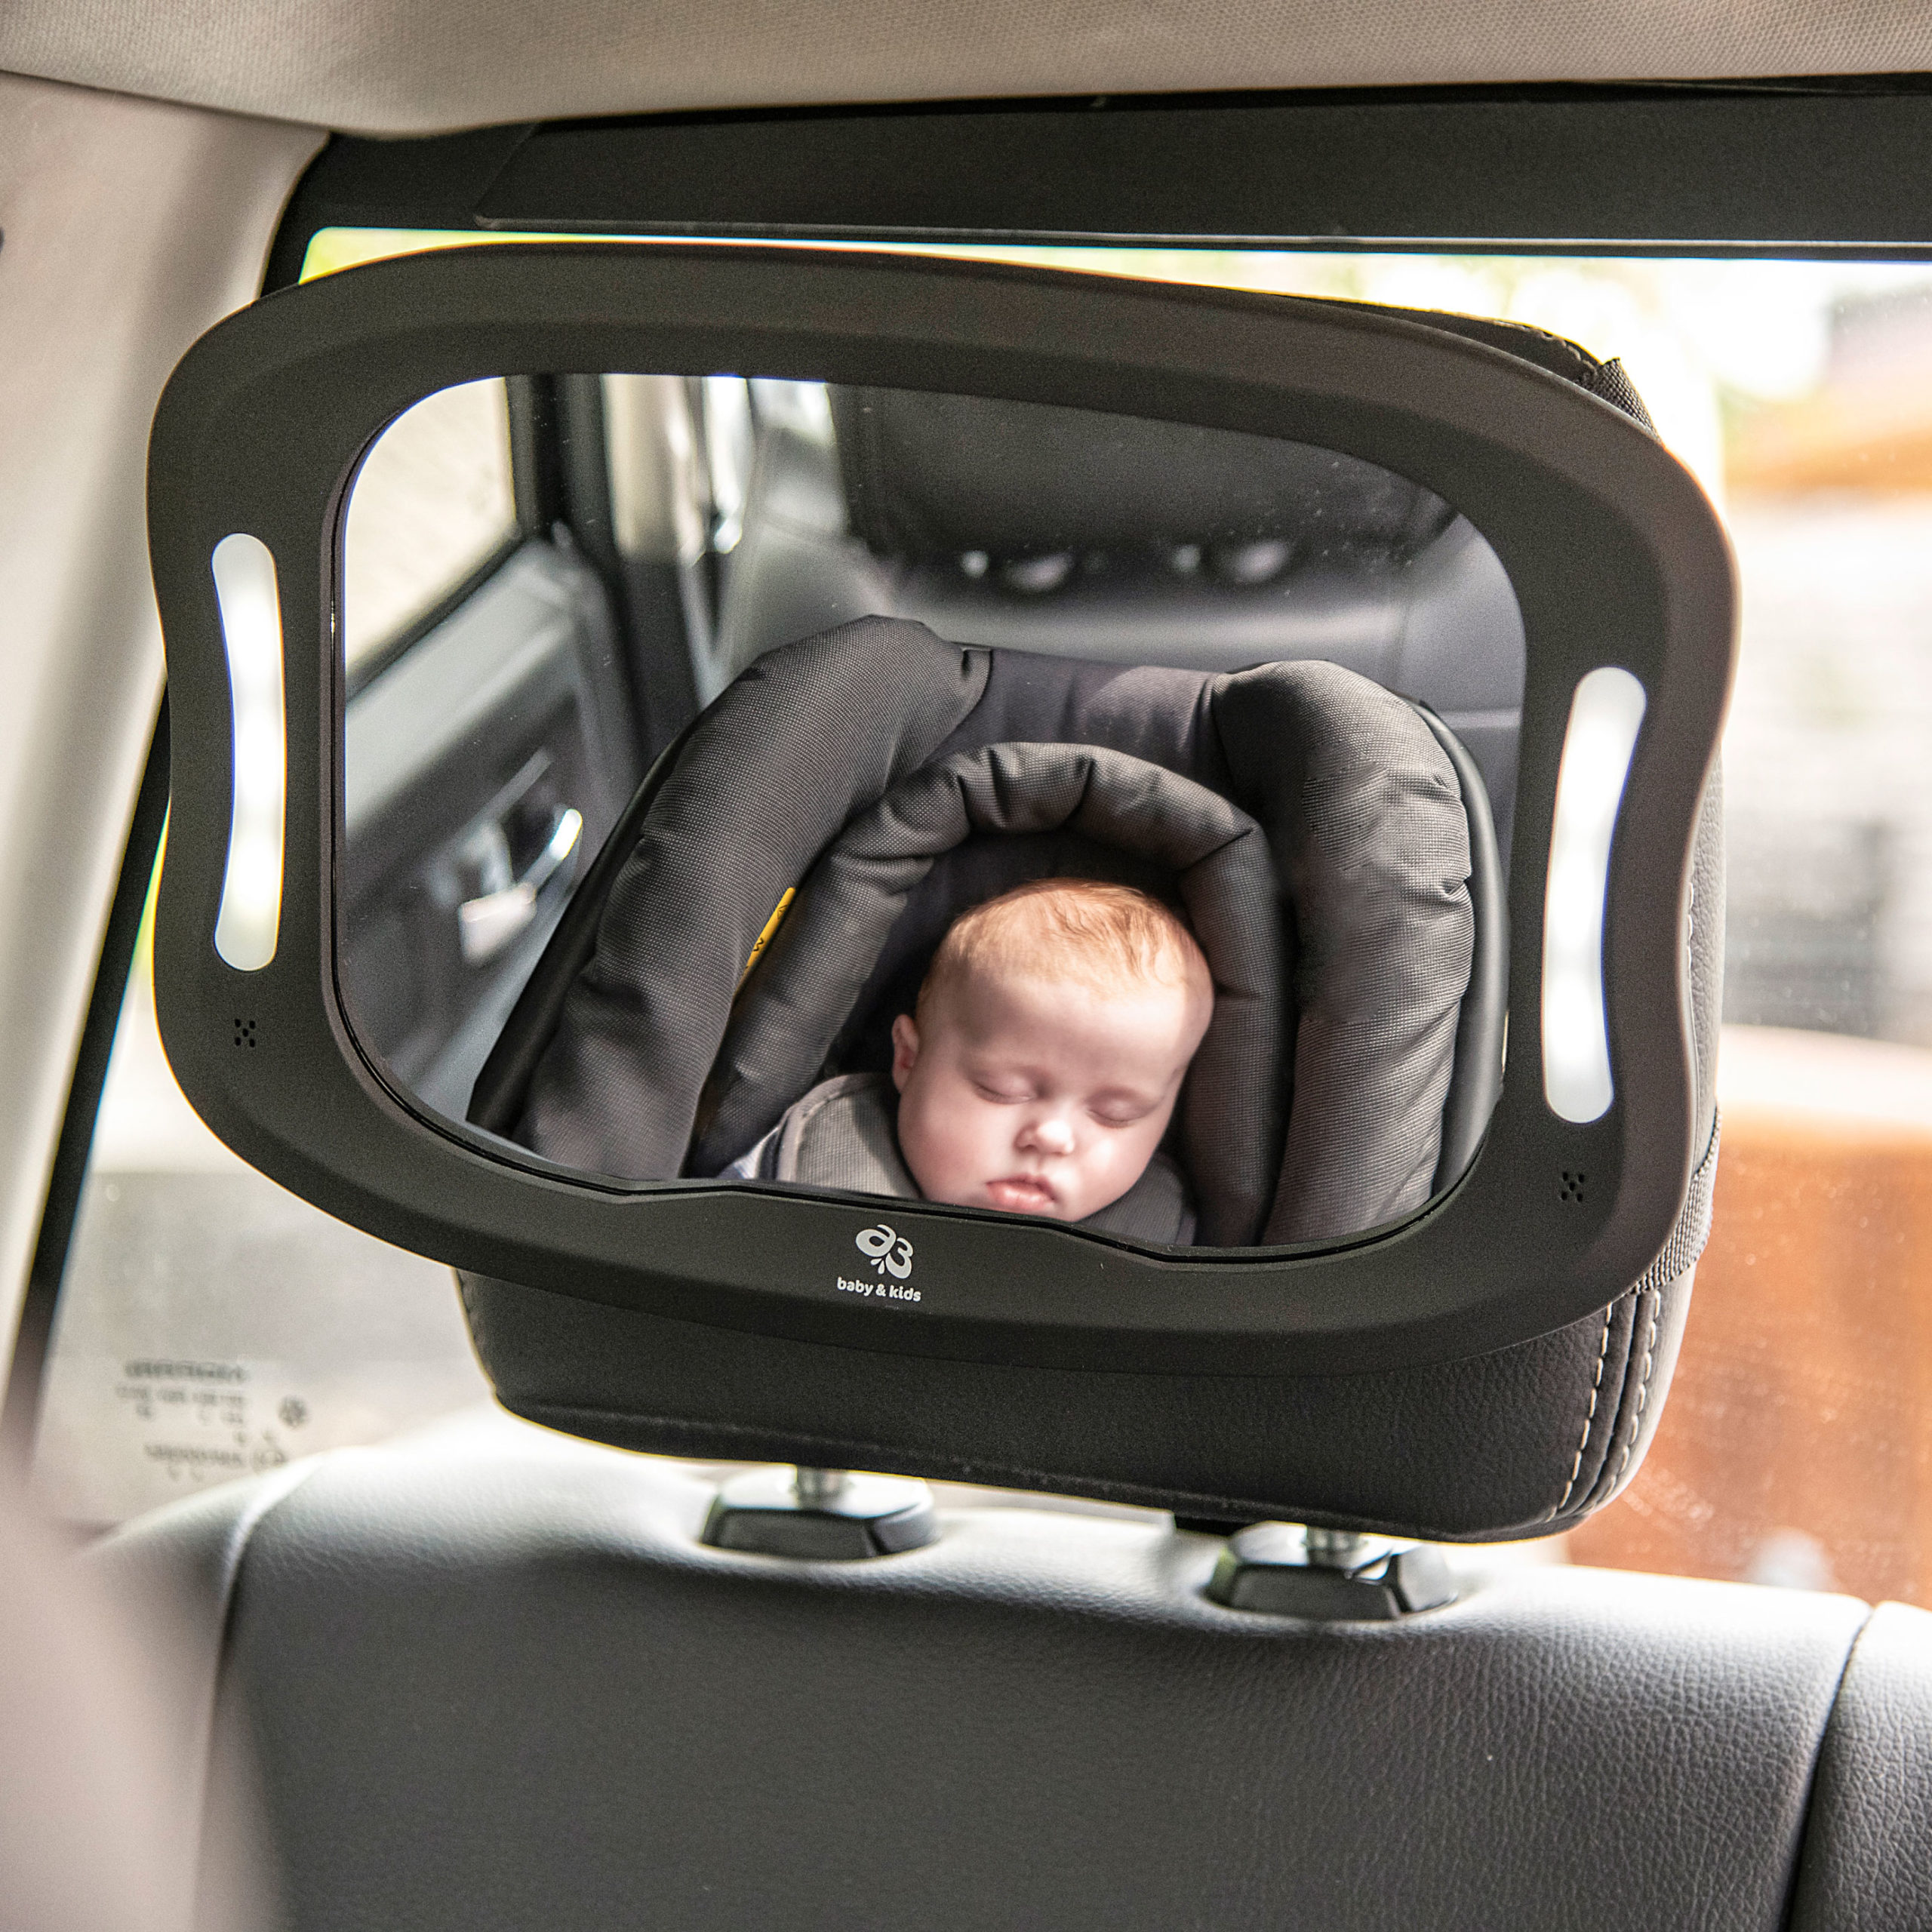 & Kids autospiegel met ledverlichting - & Kids